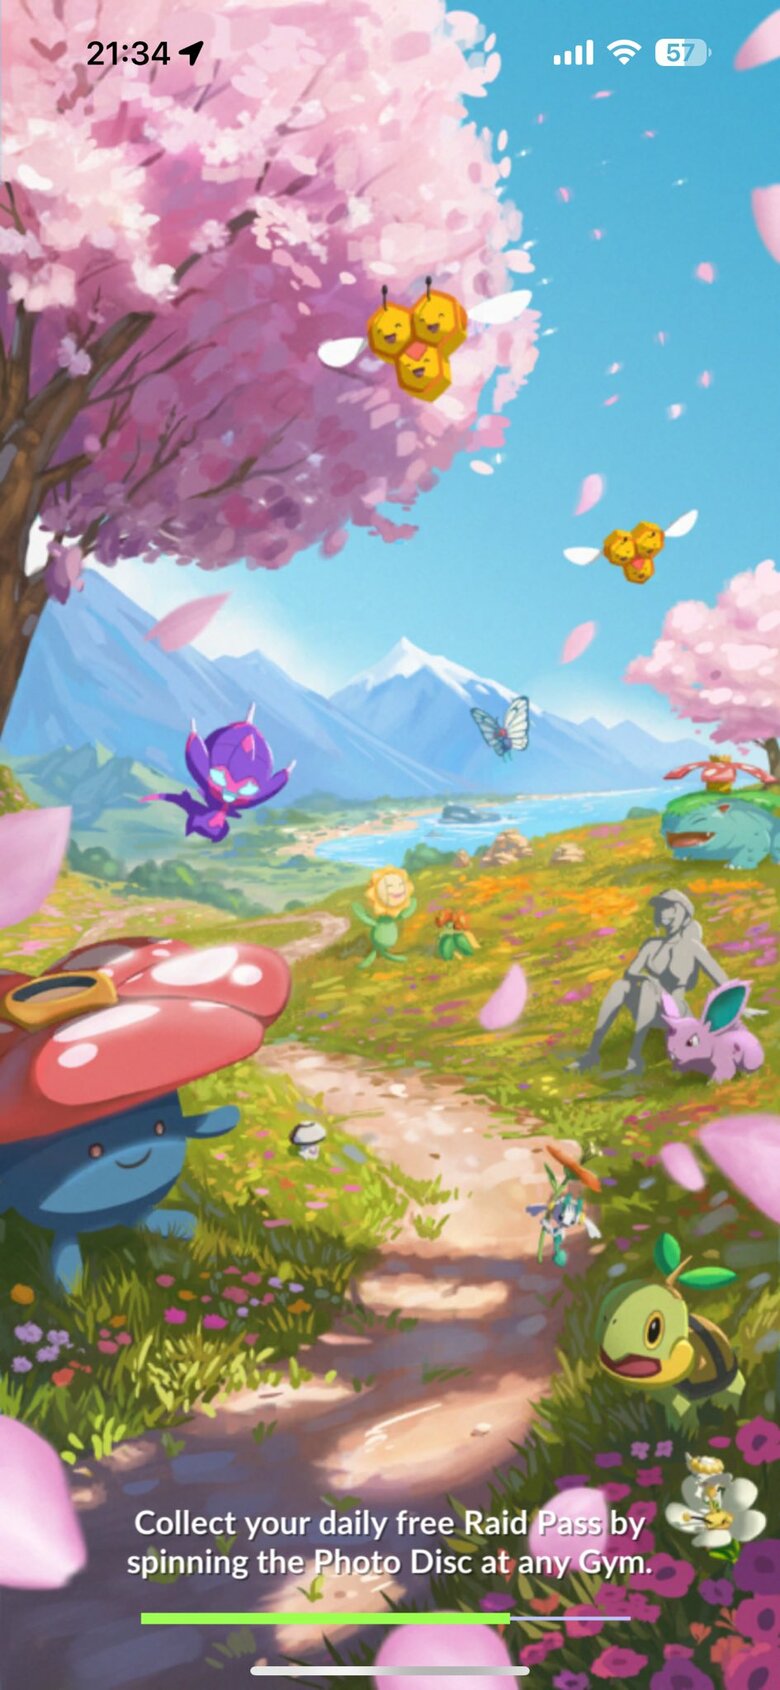 Pokémon GO gets new loading screen